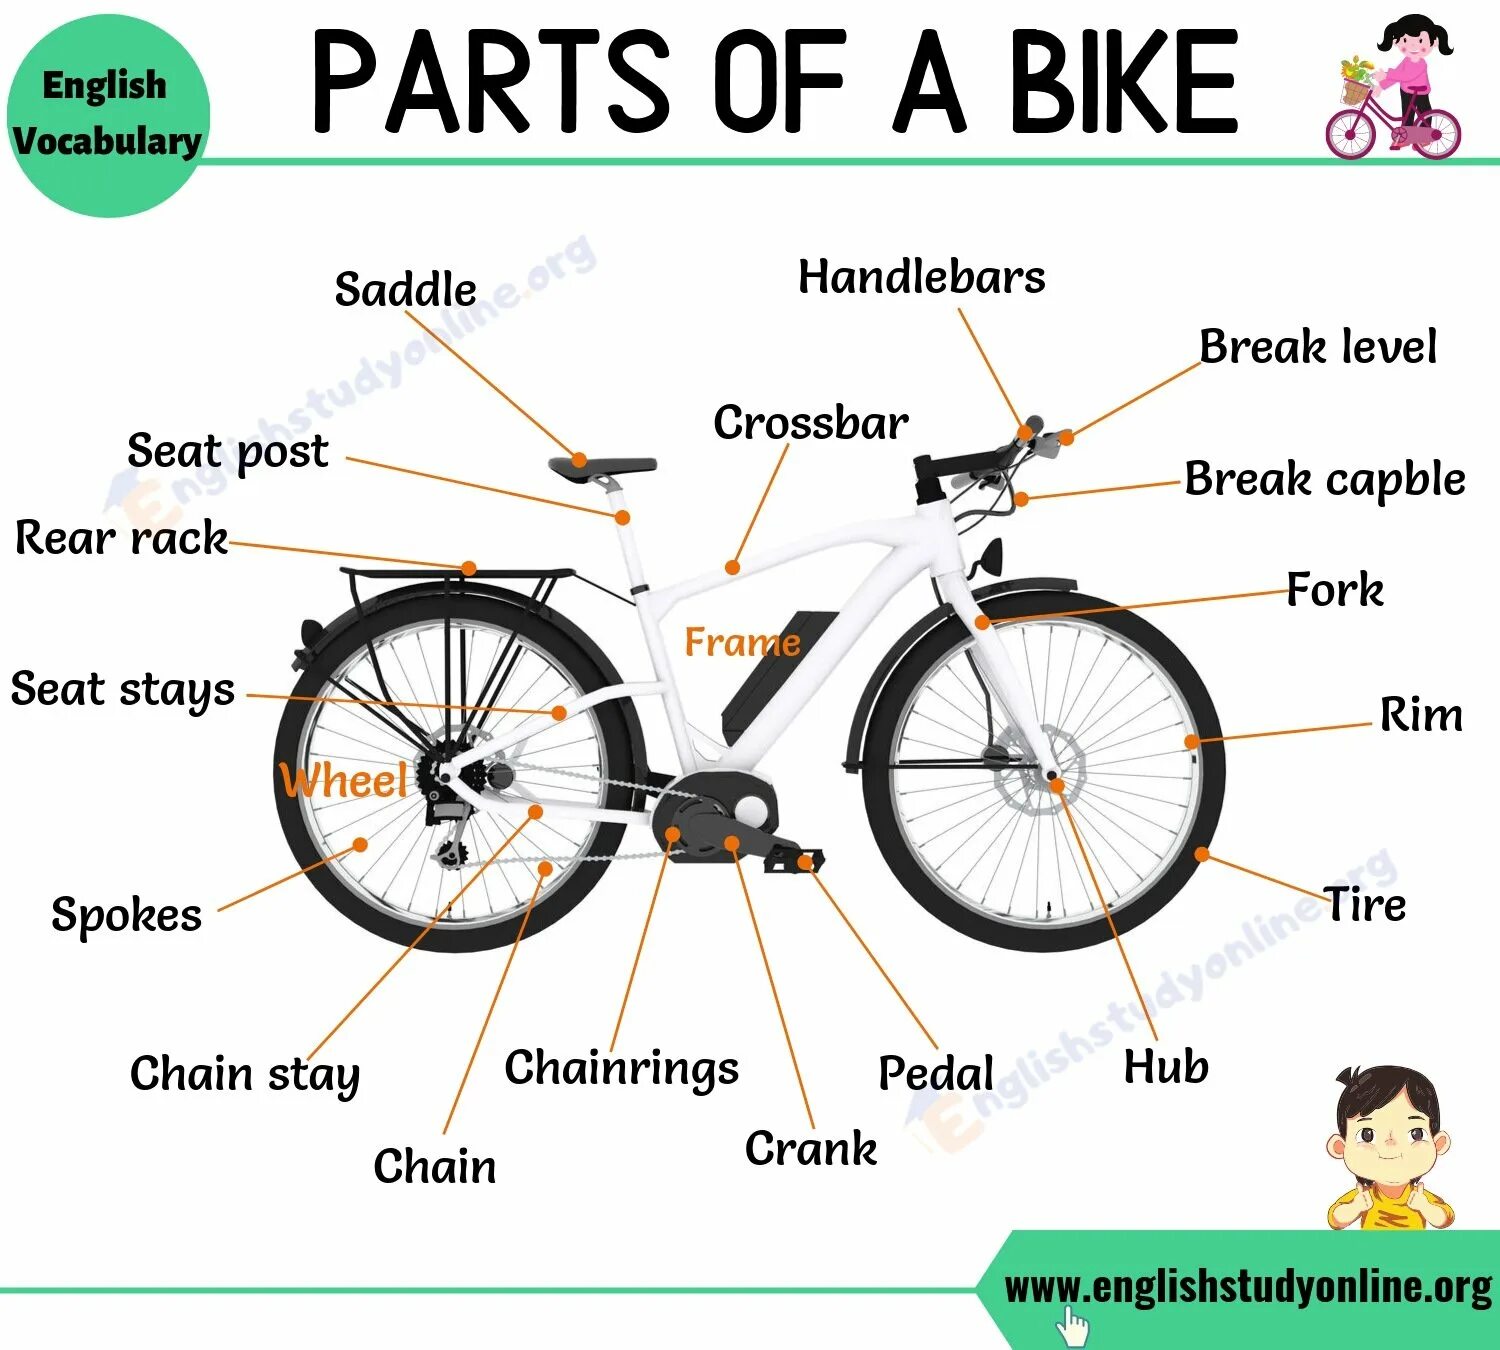 Bike parts. Части велосипеда на английском. Bicycle Parts in English. Parts of a Bike in English. Part of Bicycle.